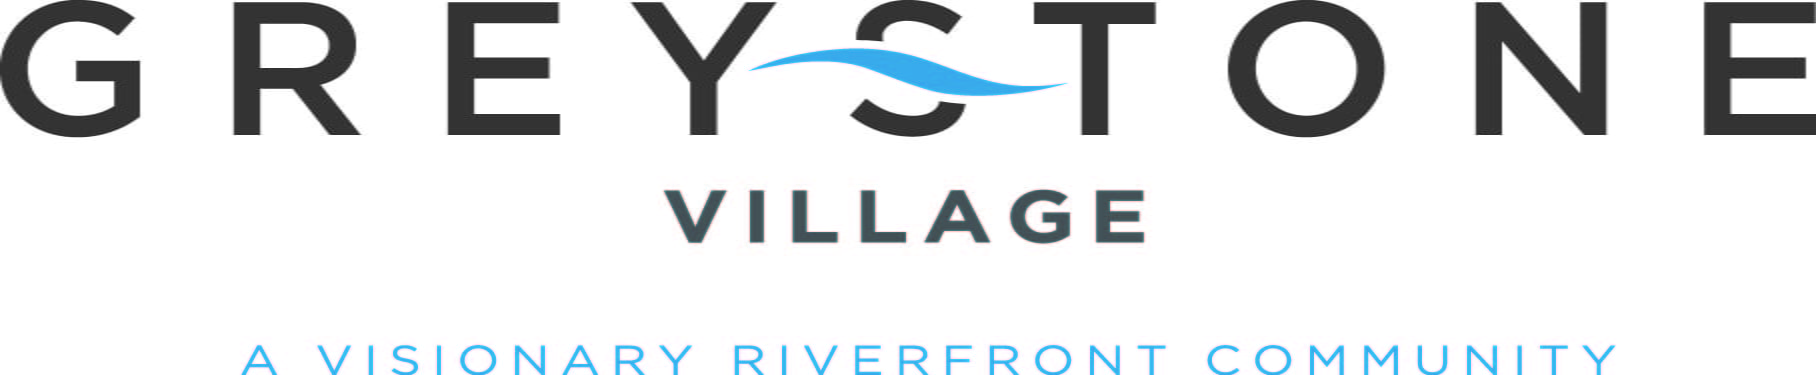 Greystone Village Logo